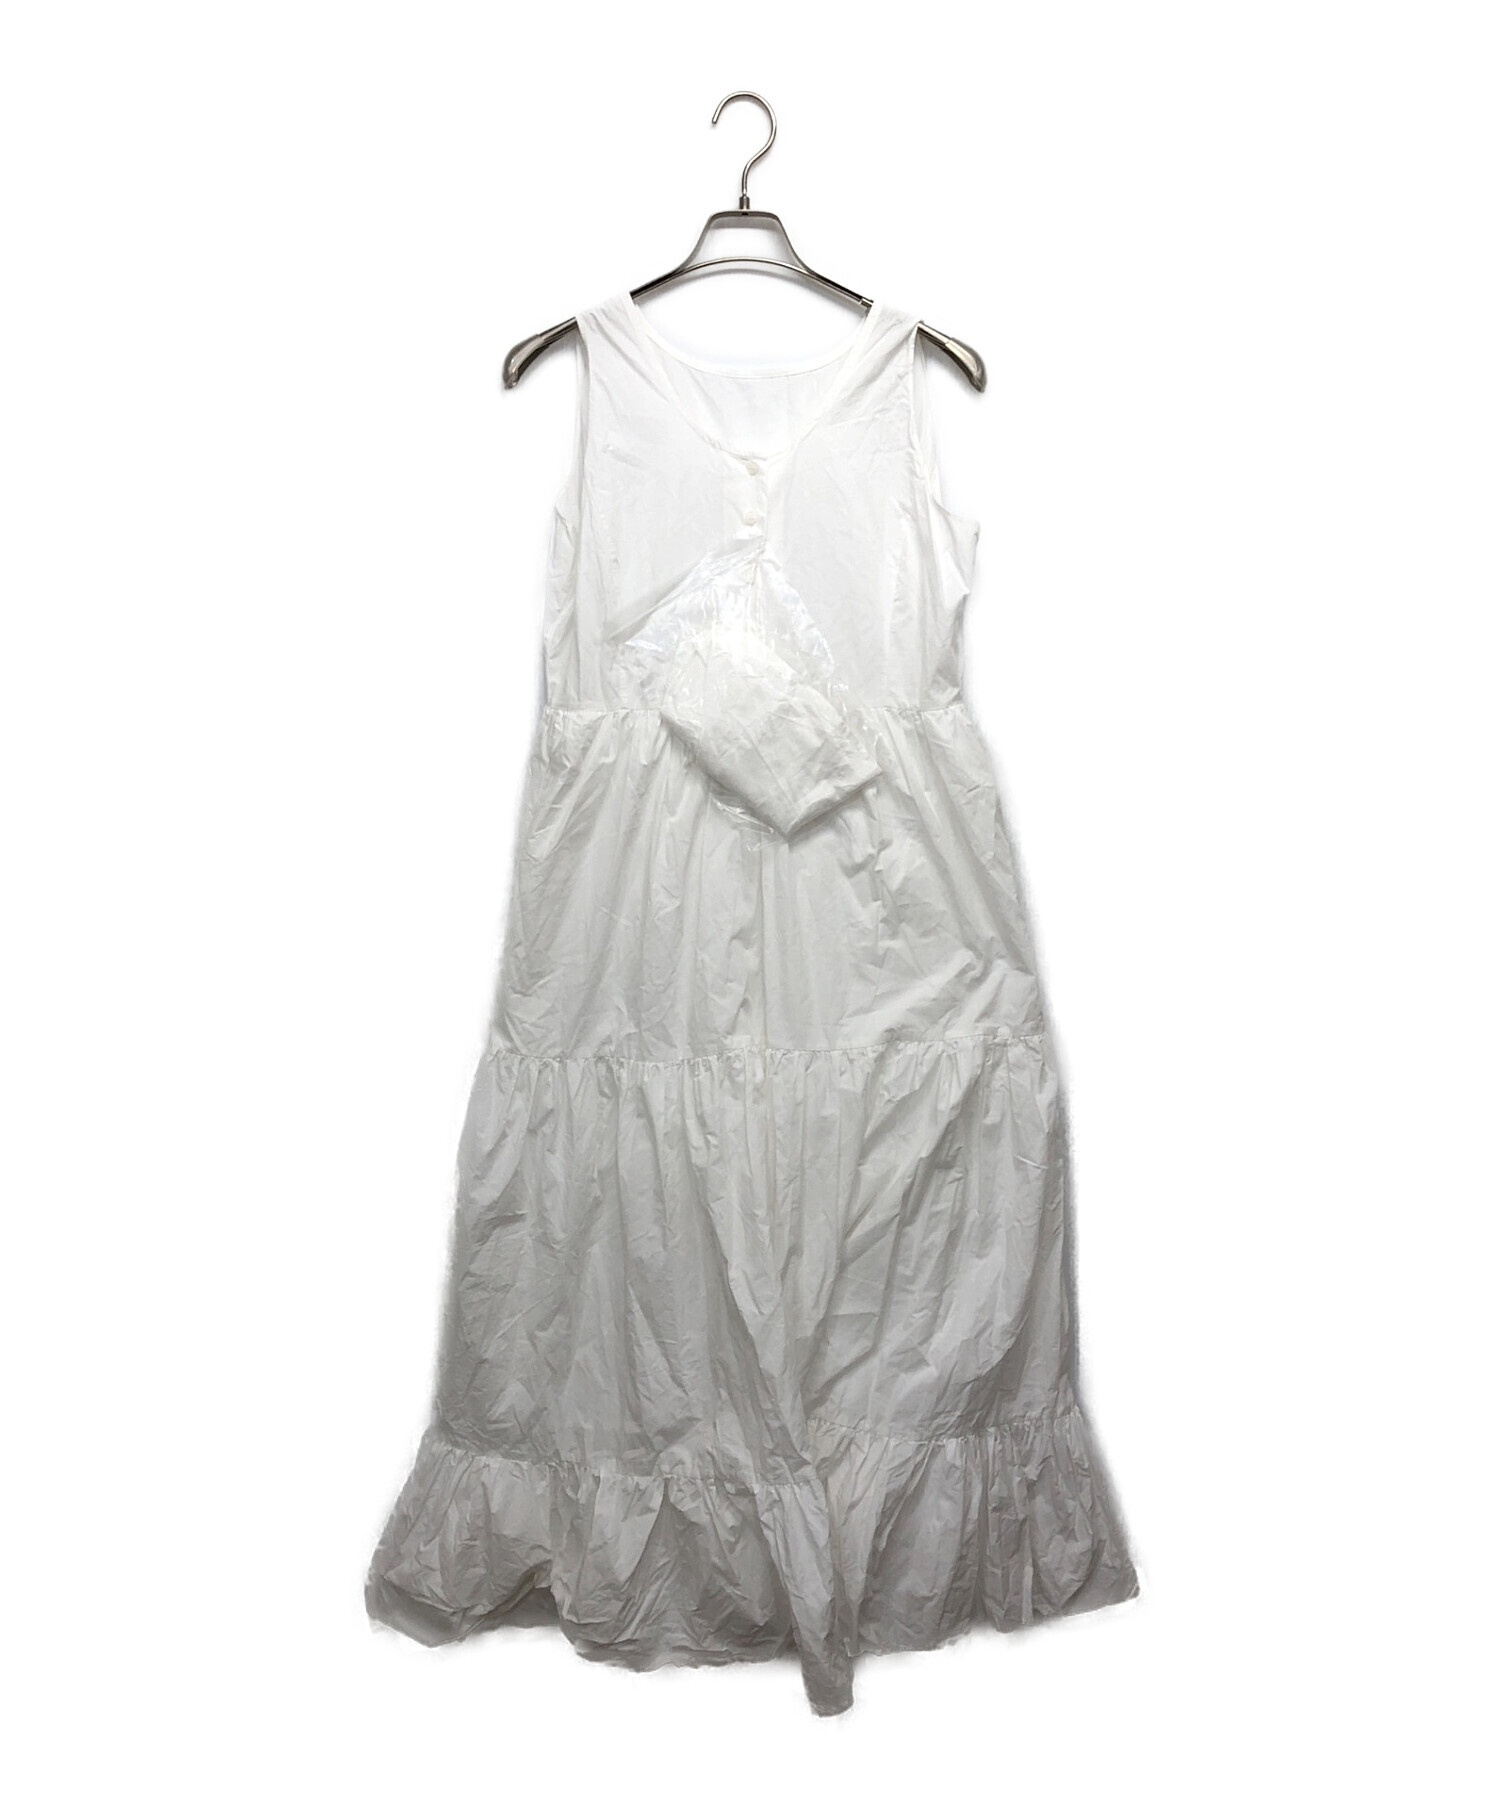 RANDEBOO Cape cotton dress